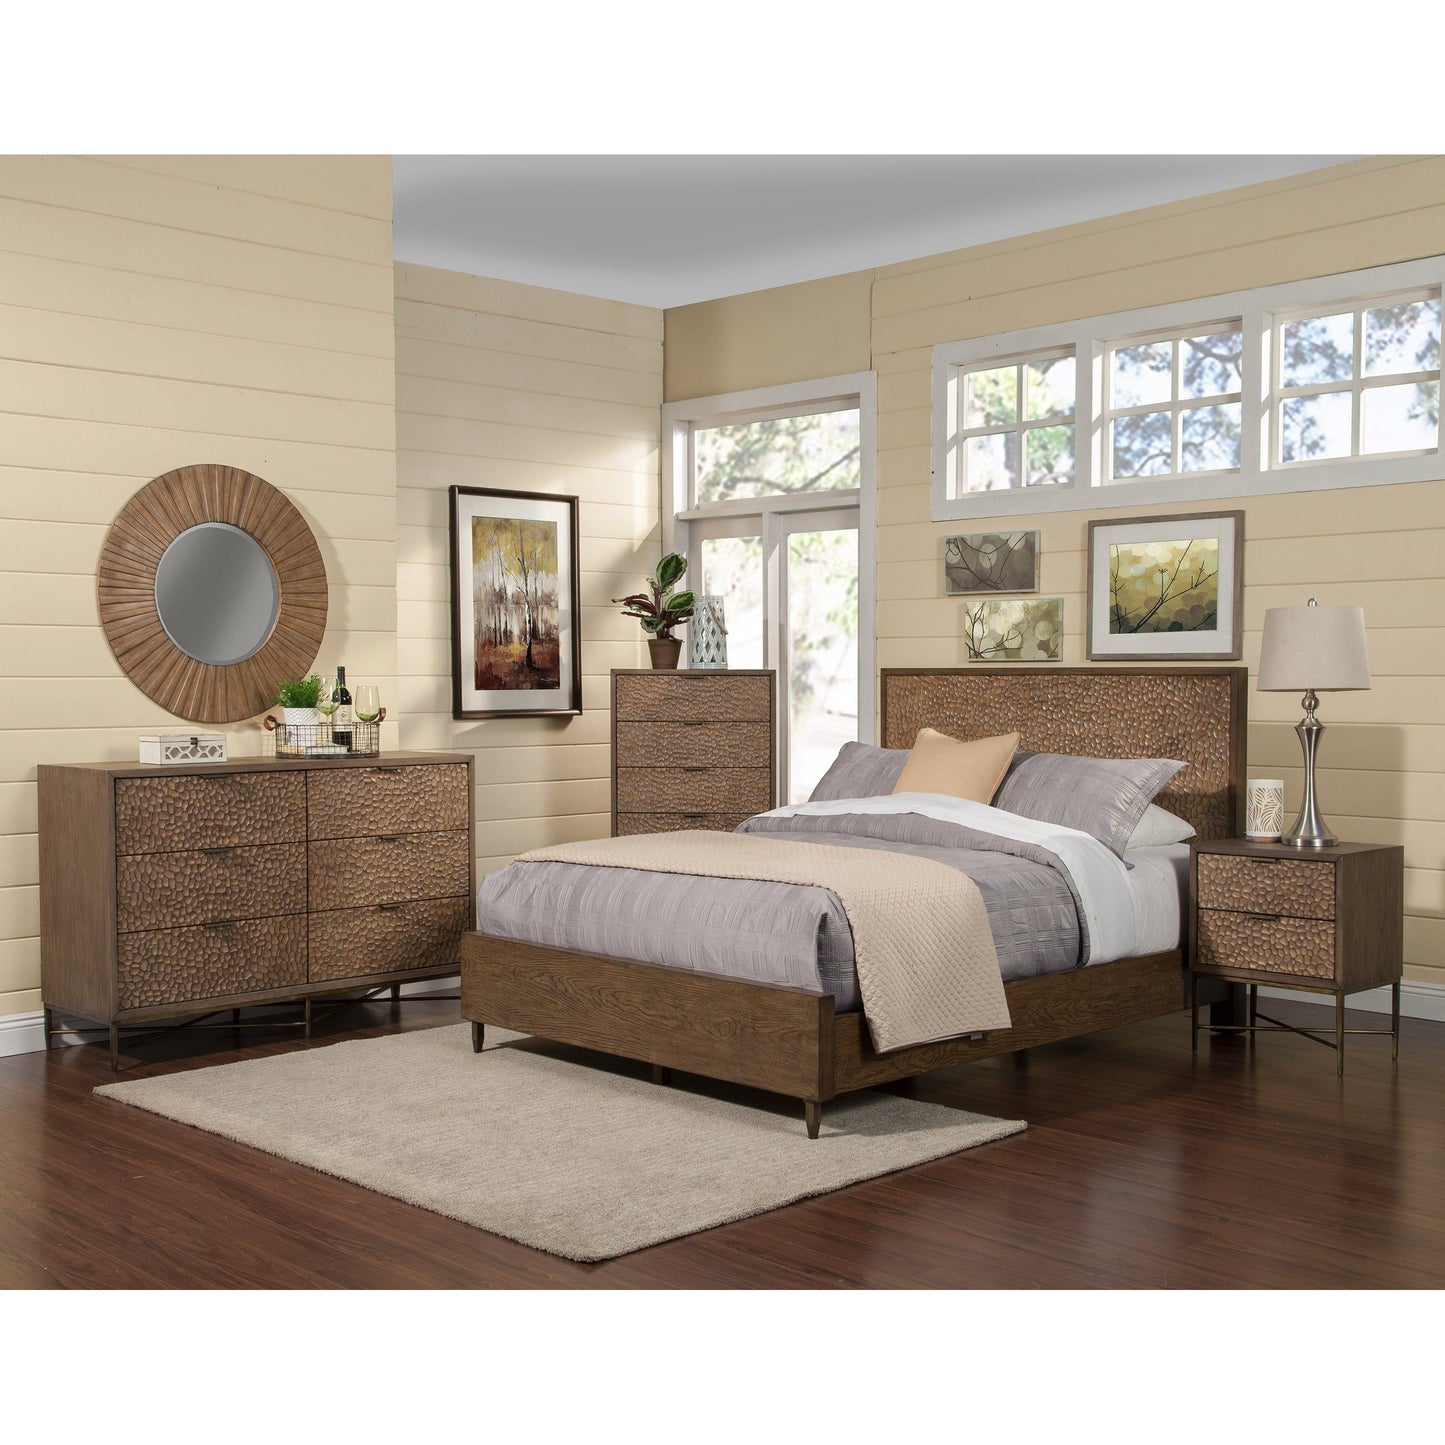 Brown Pearl Mirror, Brown Bronze - Alpine Furniture